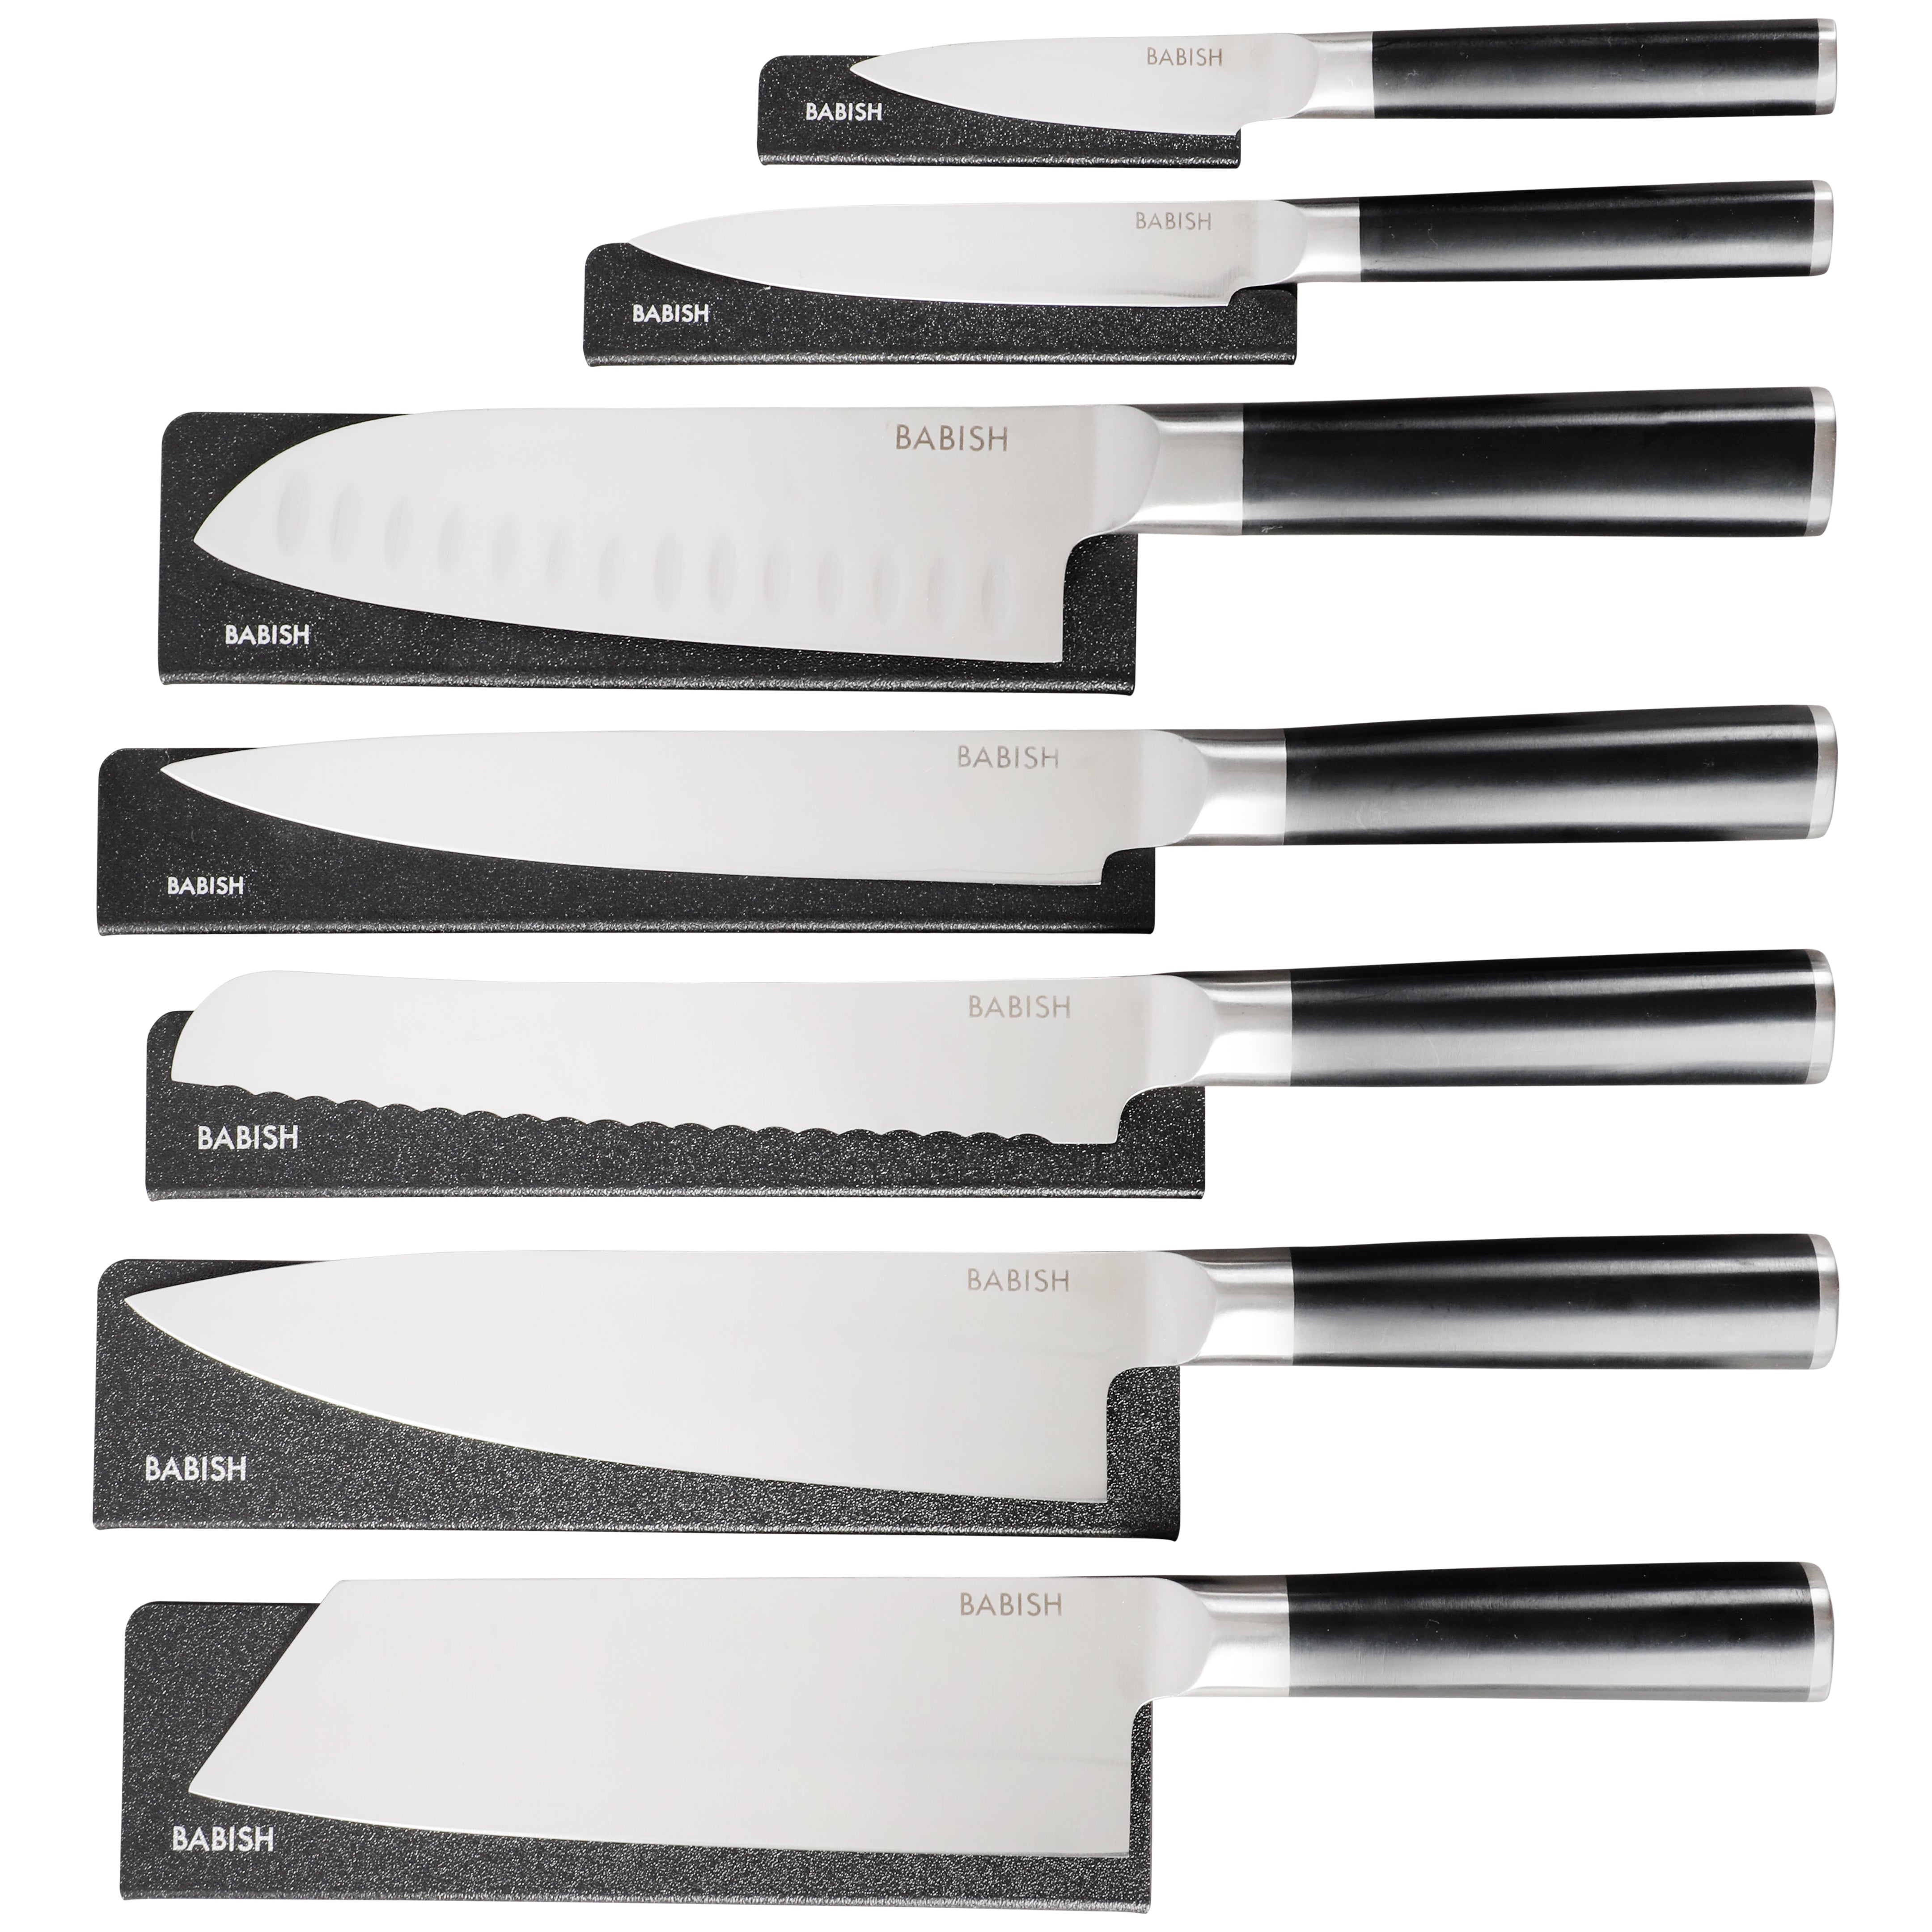 Babish High-Carbon 1.4116 German Steel 14 Piece Full Tang Forged Knife Set  W/ Sheaths